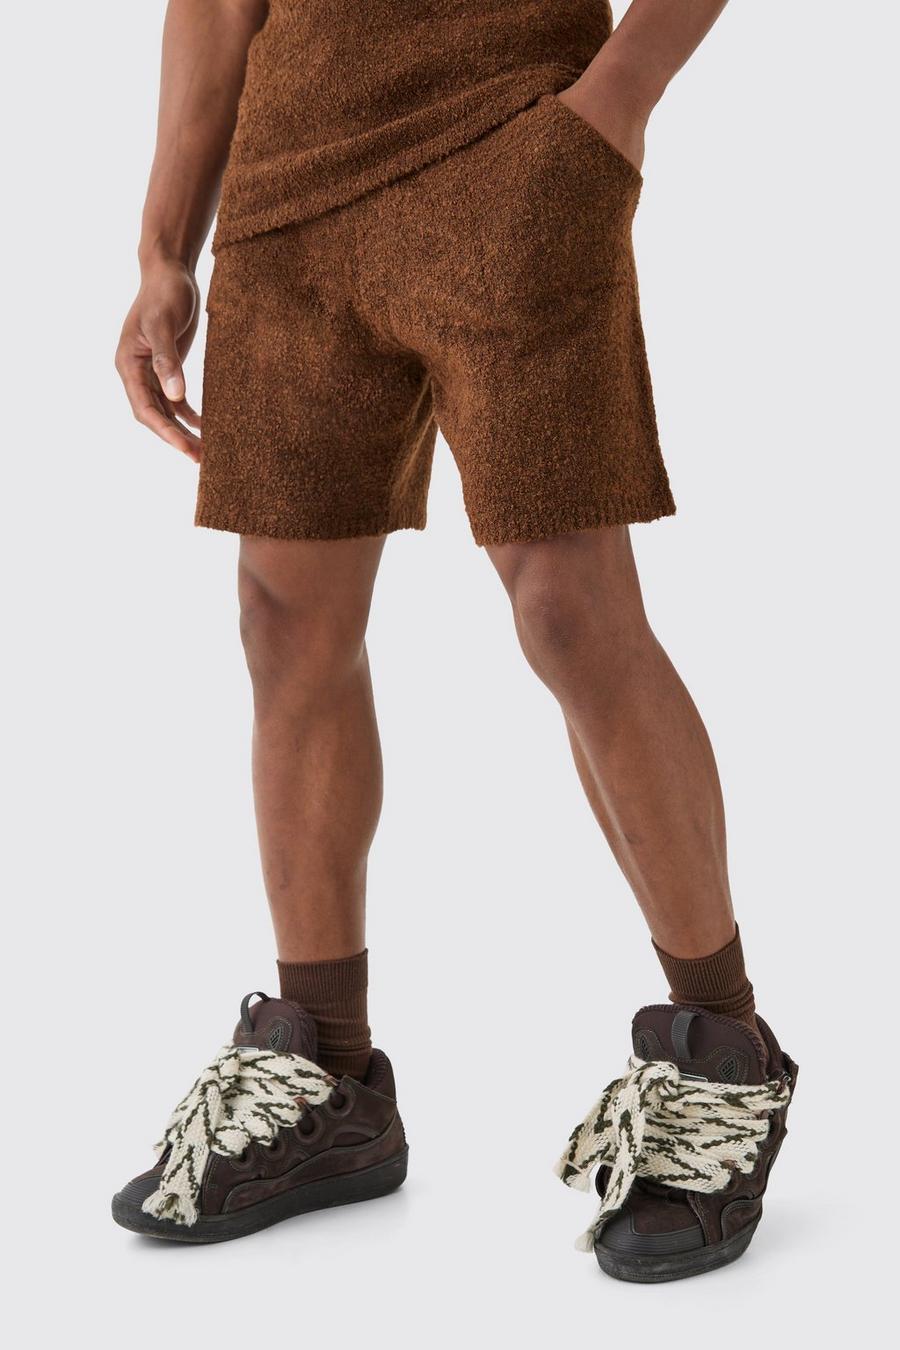 Lockere Bouclee-Shorts in Braun, Chocolate image number 1